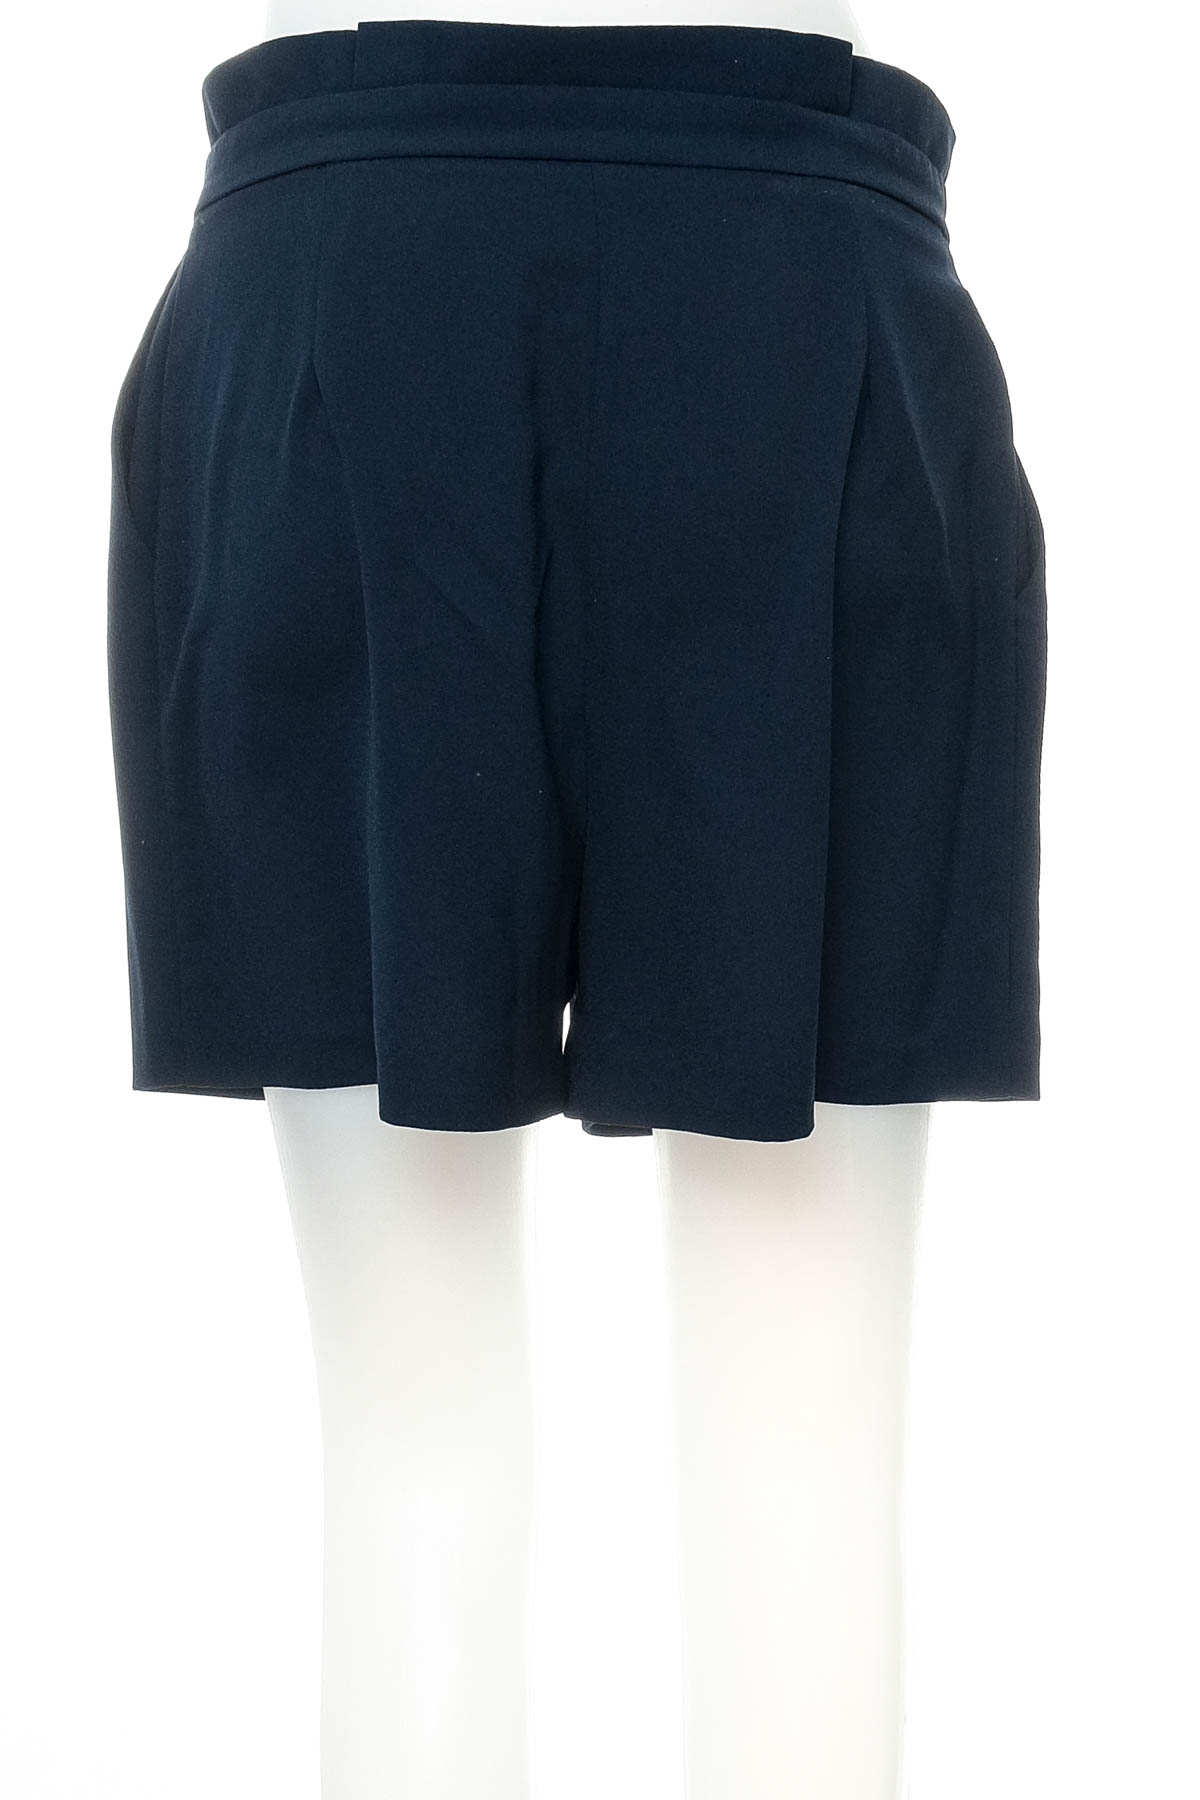 Female shorts - Pimkie - 1